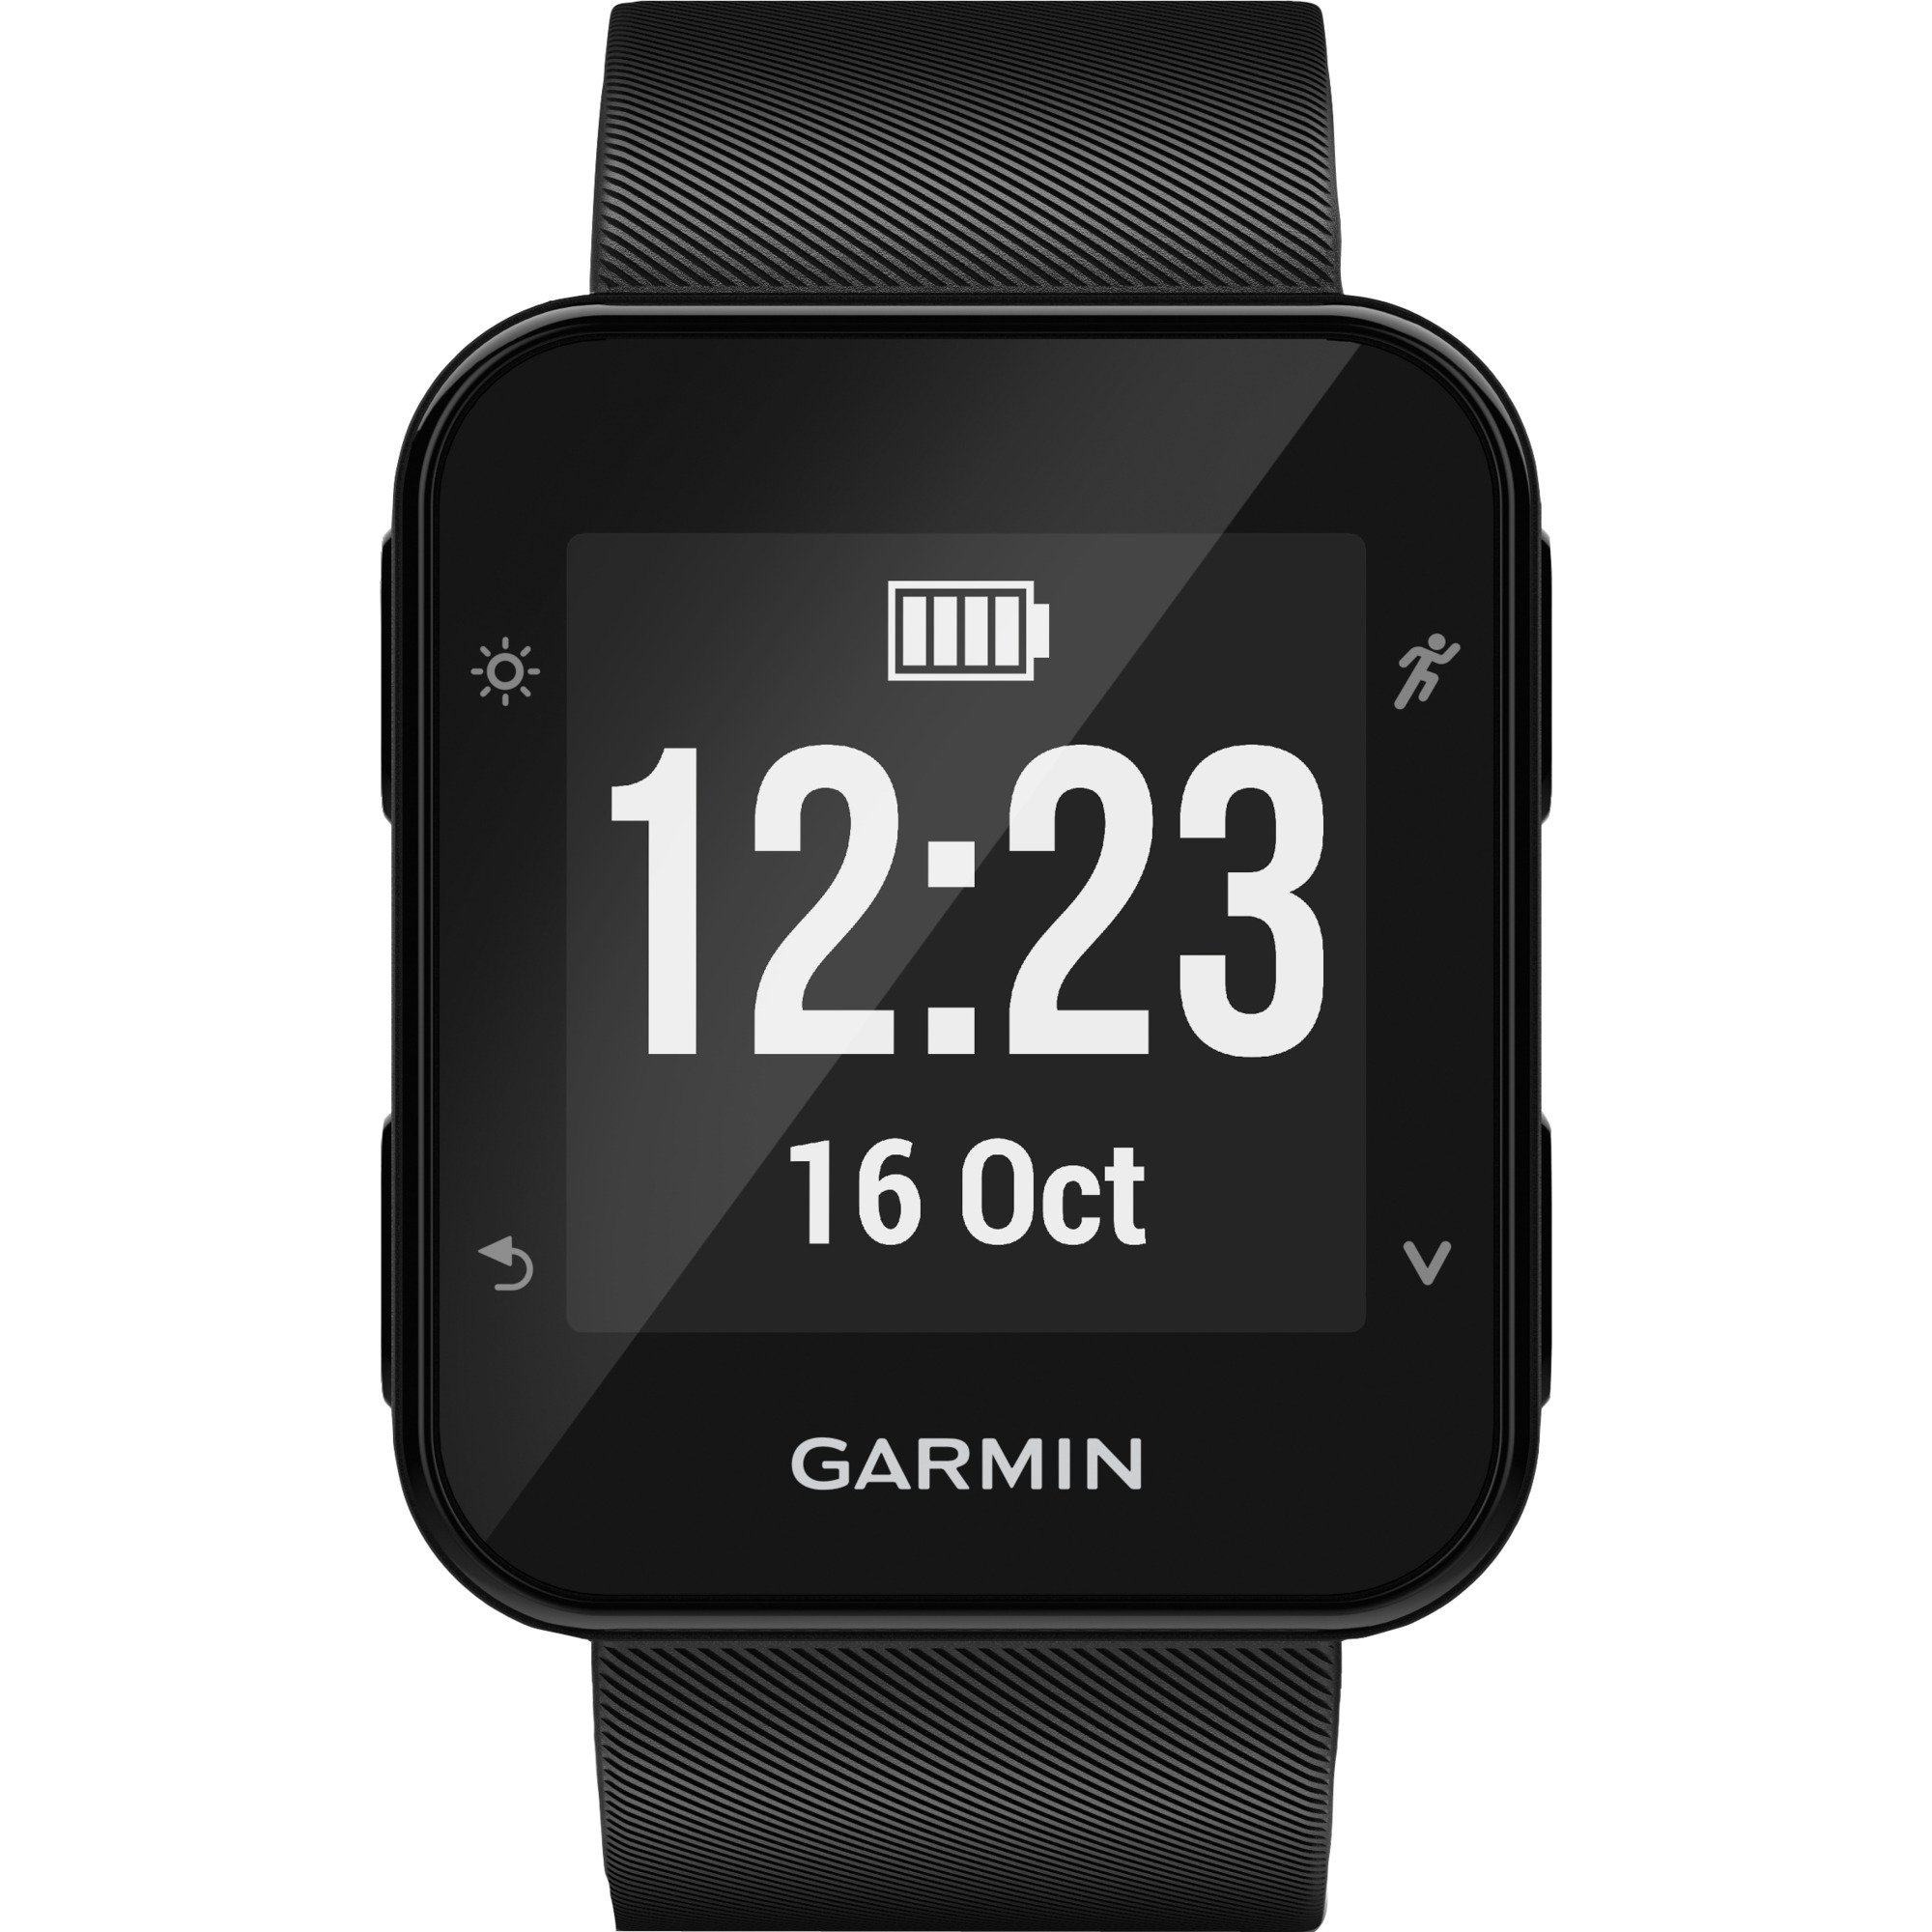 Forerunner 35 zegarek sportowy Czarny 128 x 128 piksele Bluetooth, SmartWatch